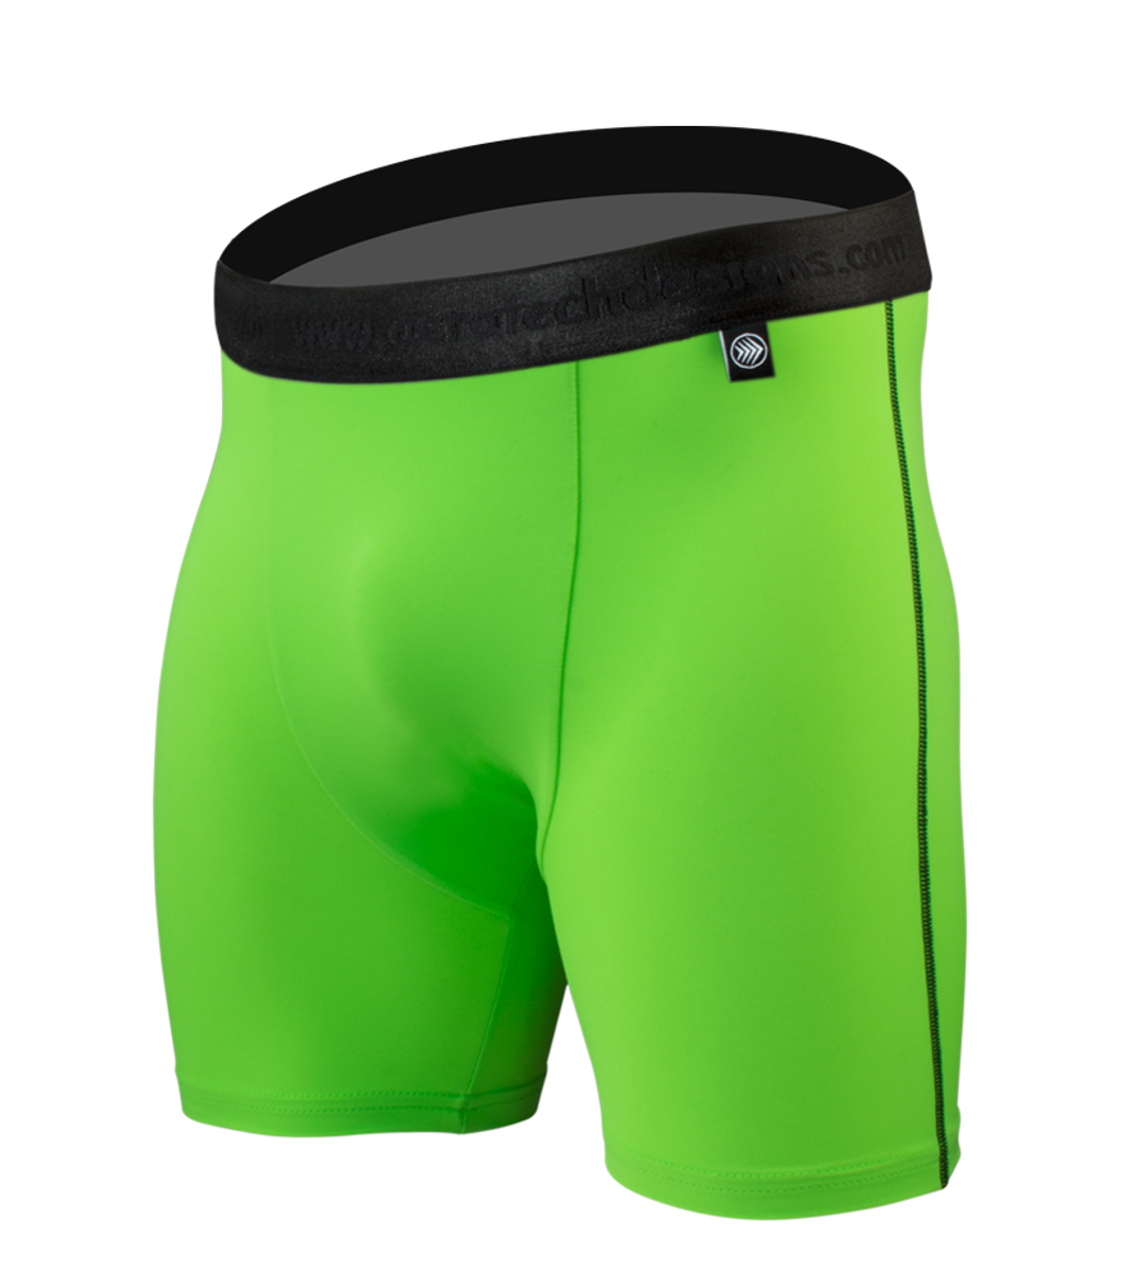 Aero Tech Men's Underwear - Soft High-Performance Compression boxers